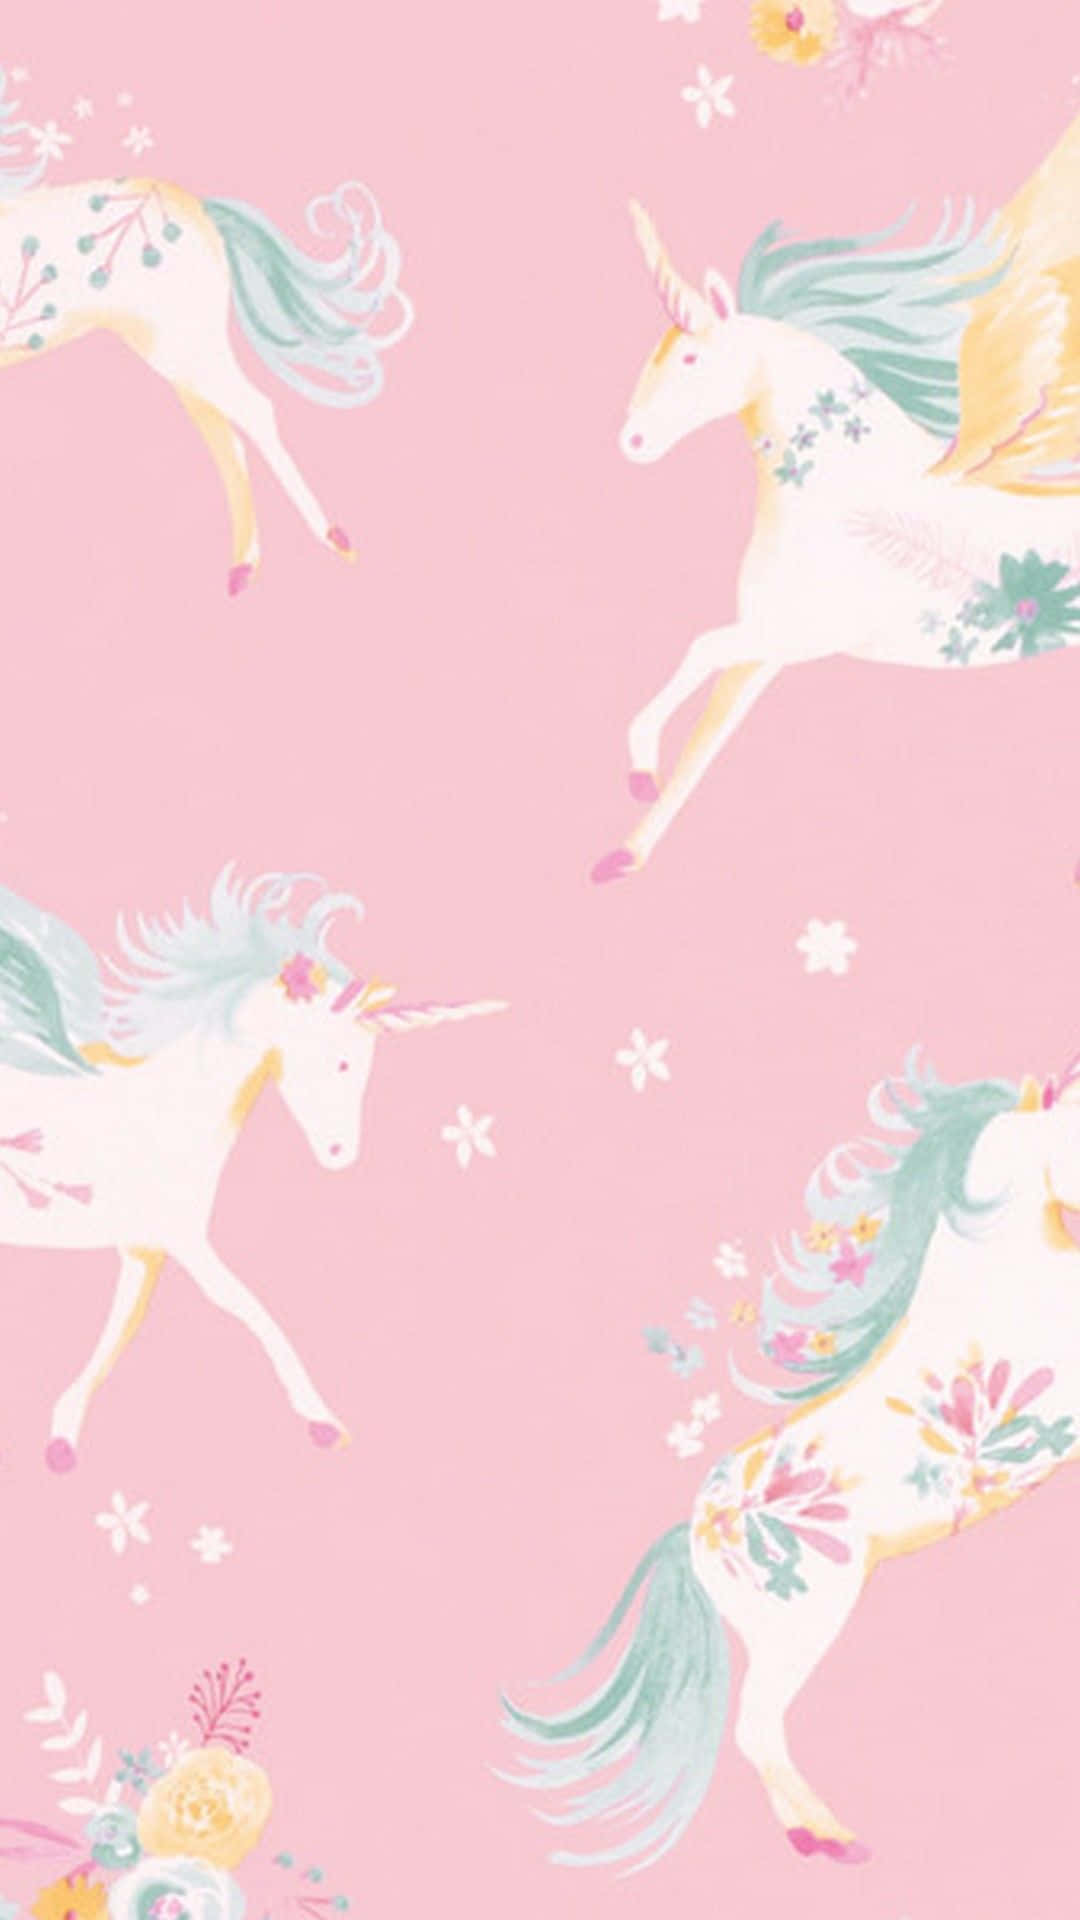 Free Unicorn Aesthetic Wallpaper Downloads, Unicorn Aesthetic Wallpaper for FREE